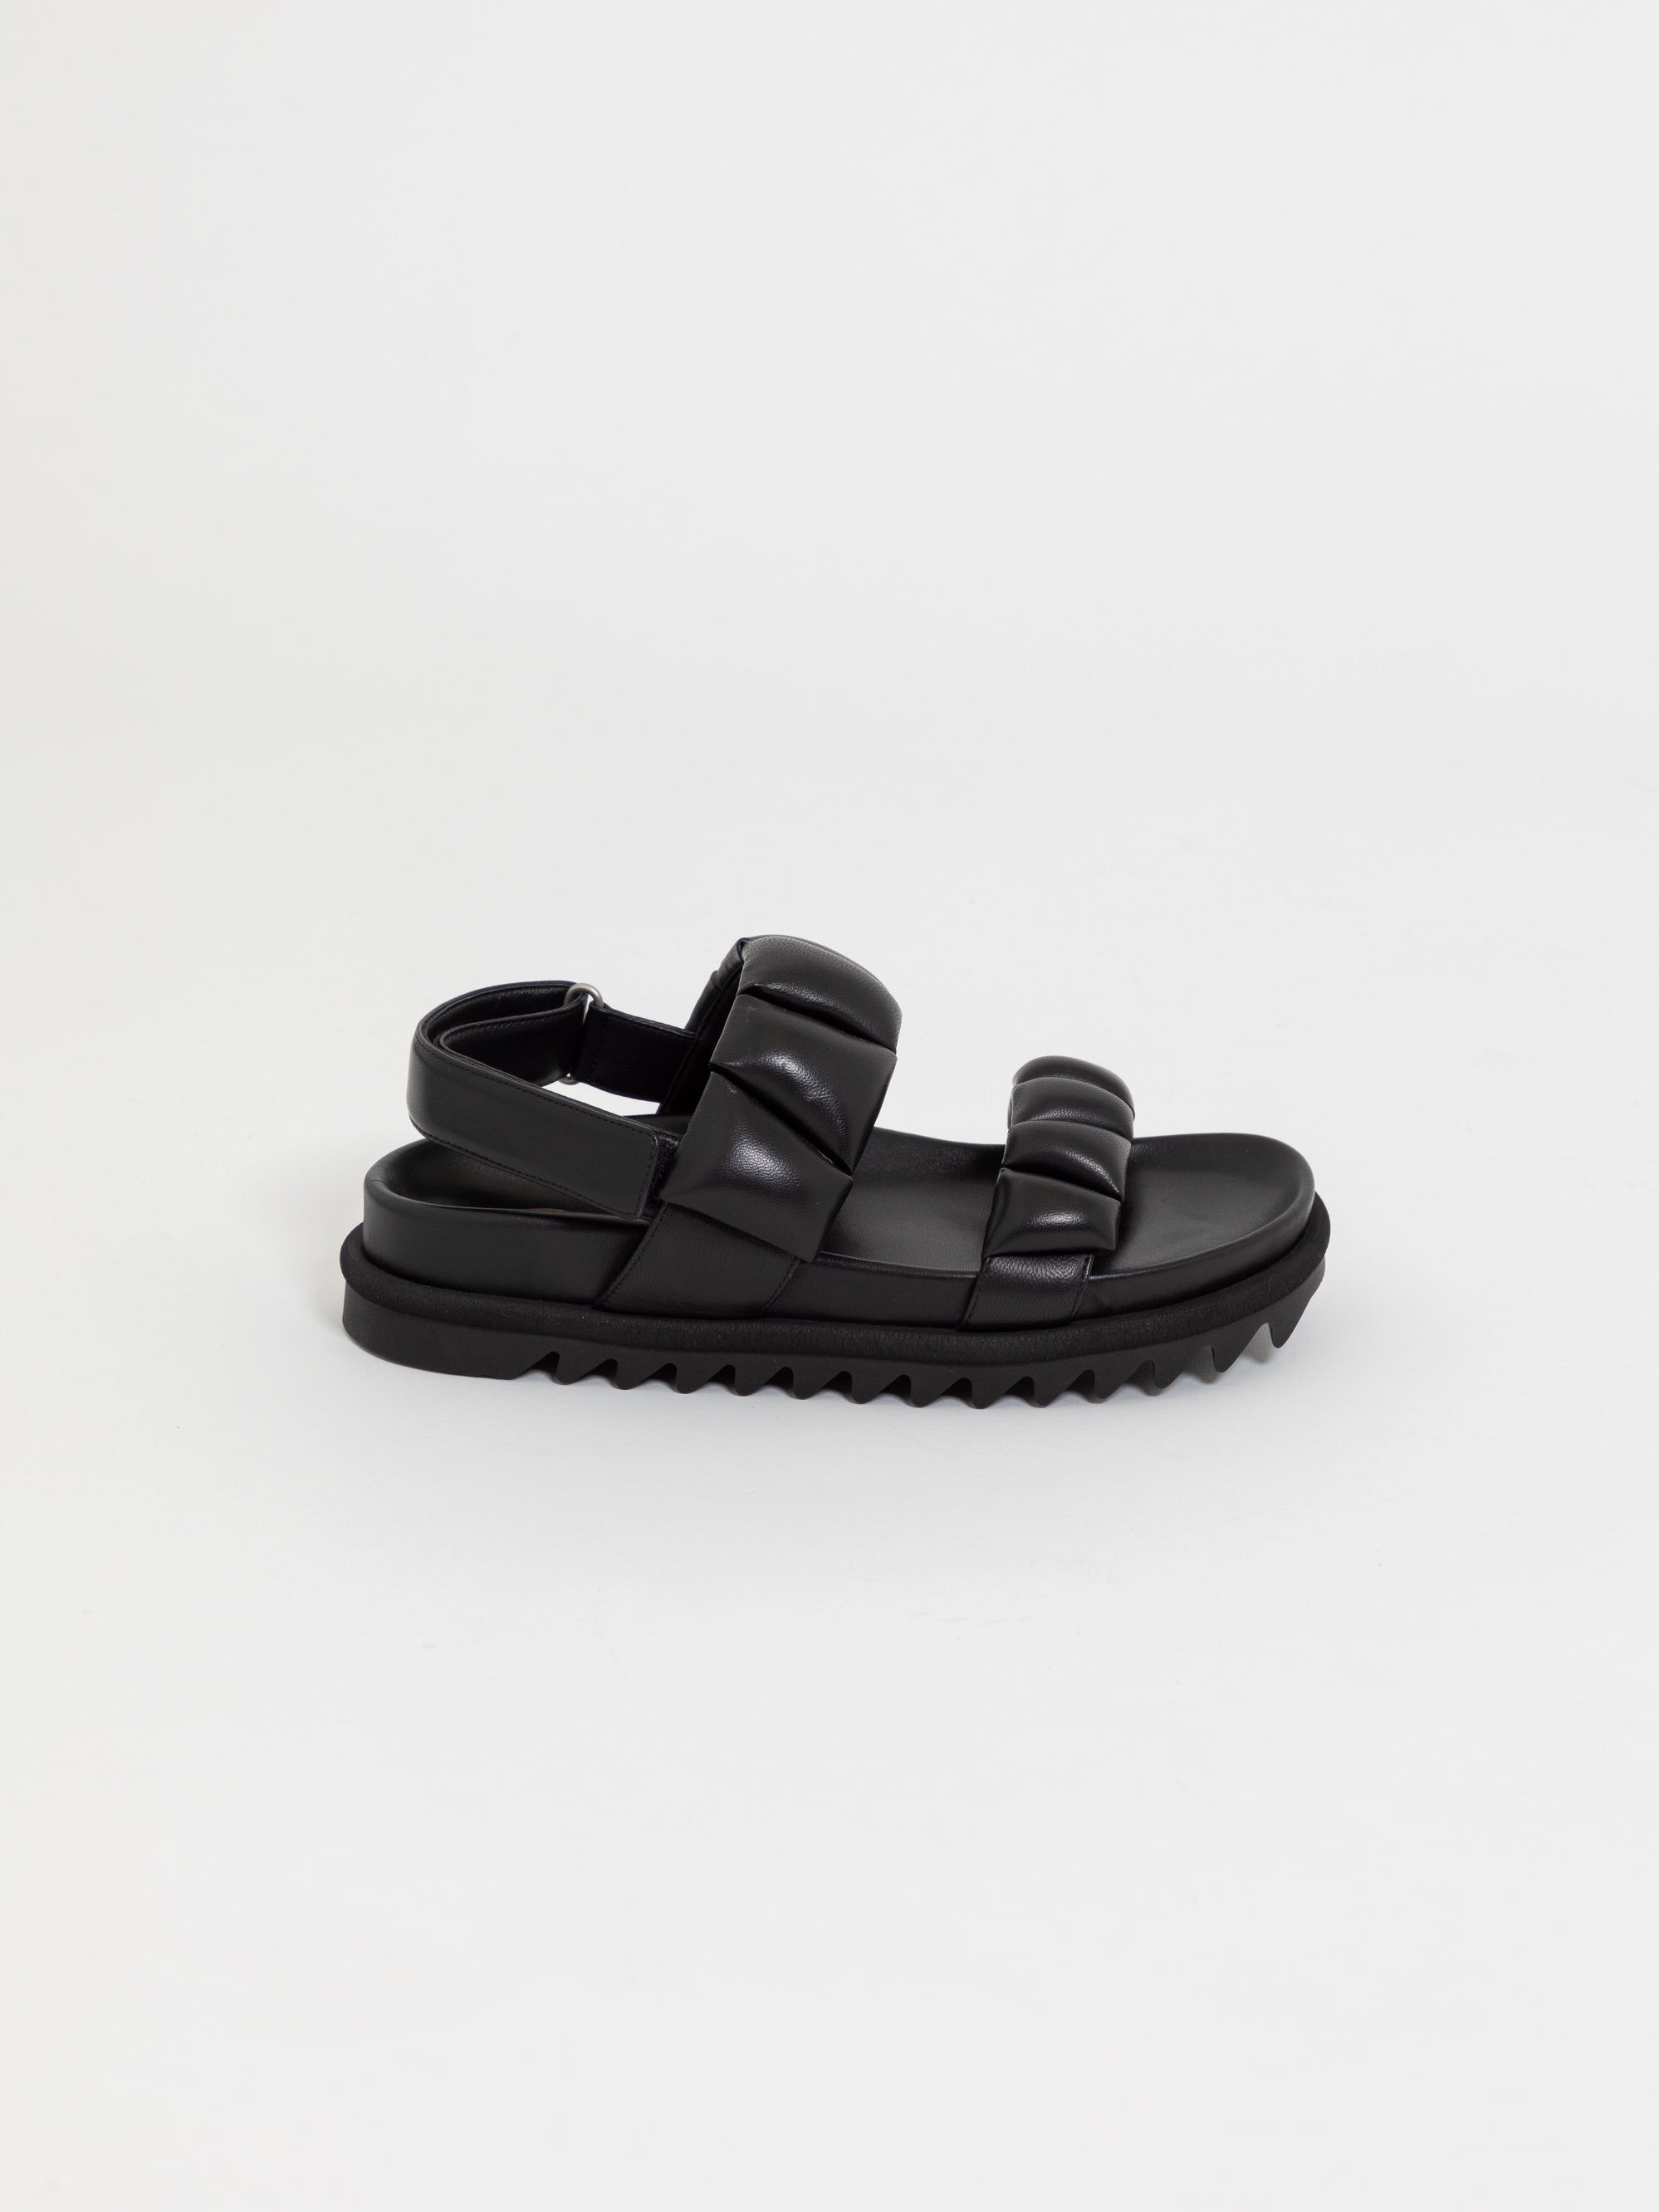 Morton W Black Leather Sandals by Ziera | Shop Online at Ziera NZ